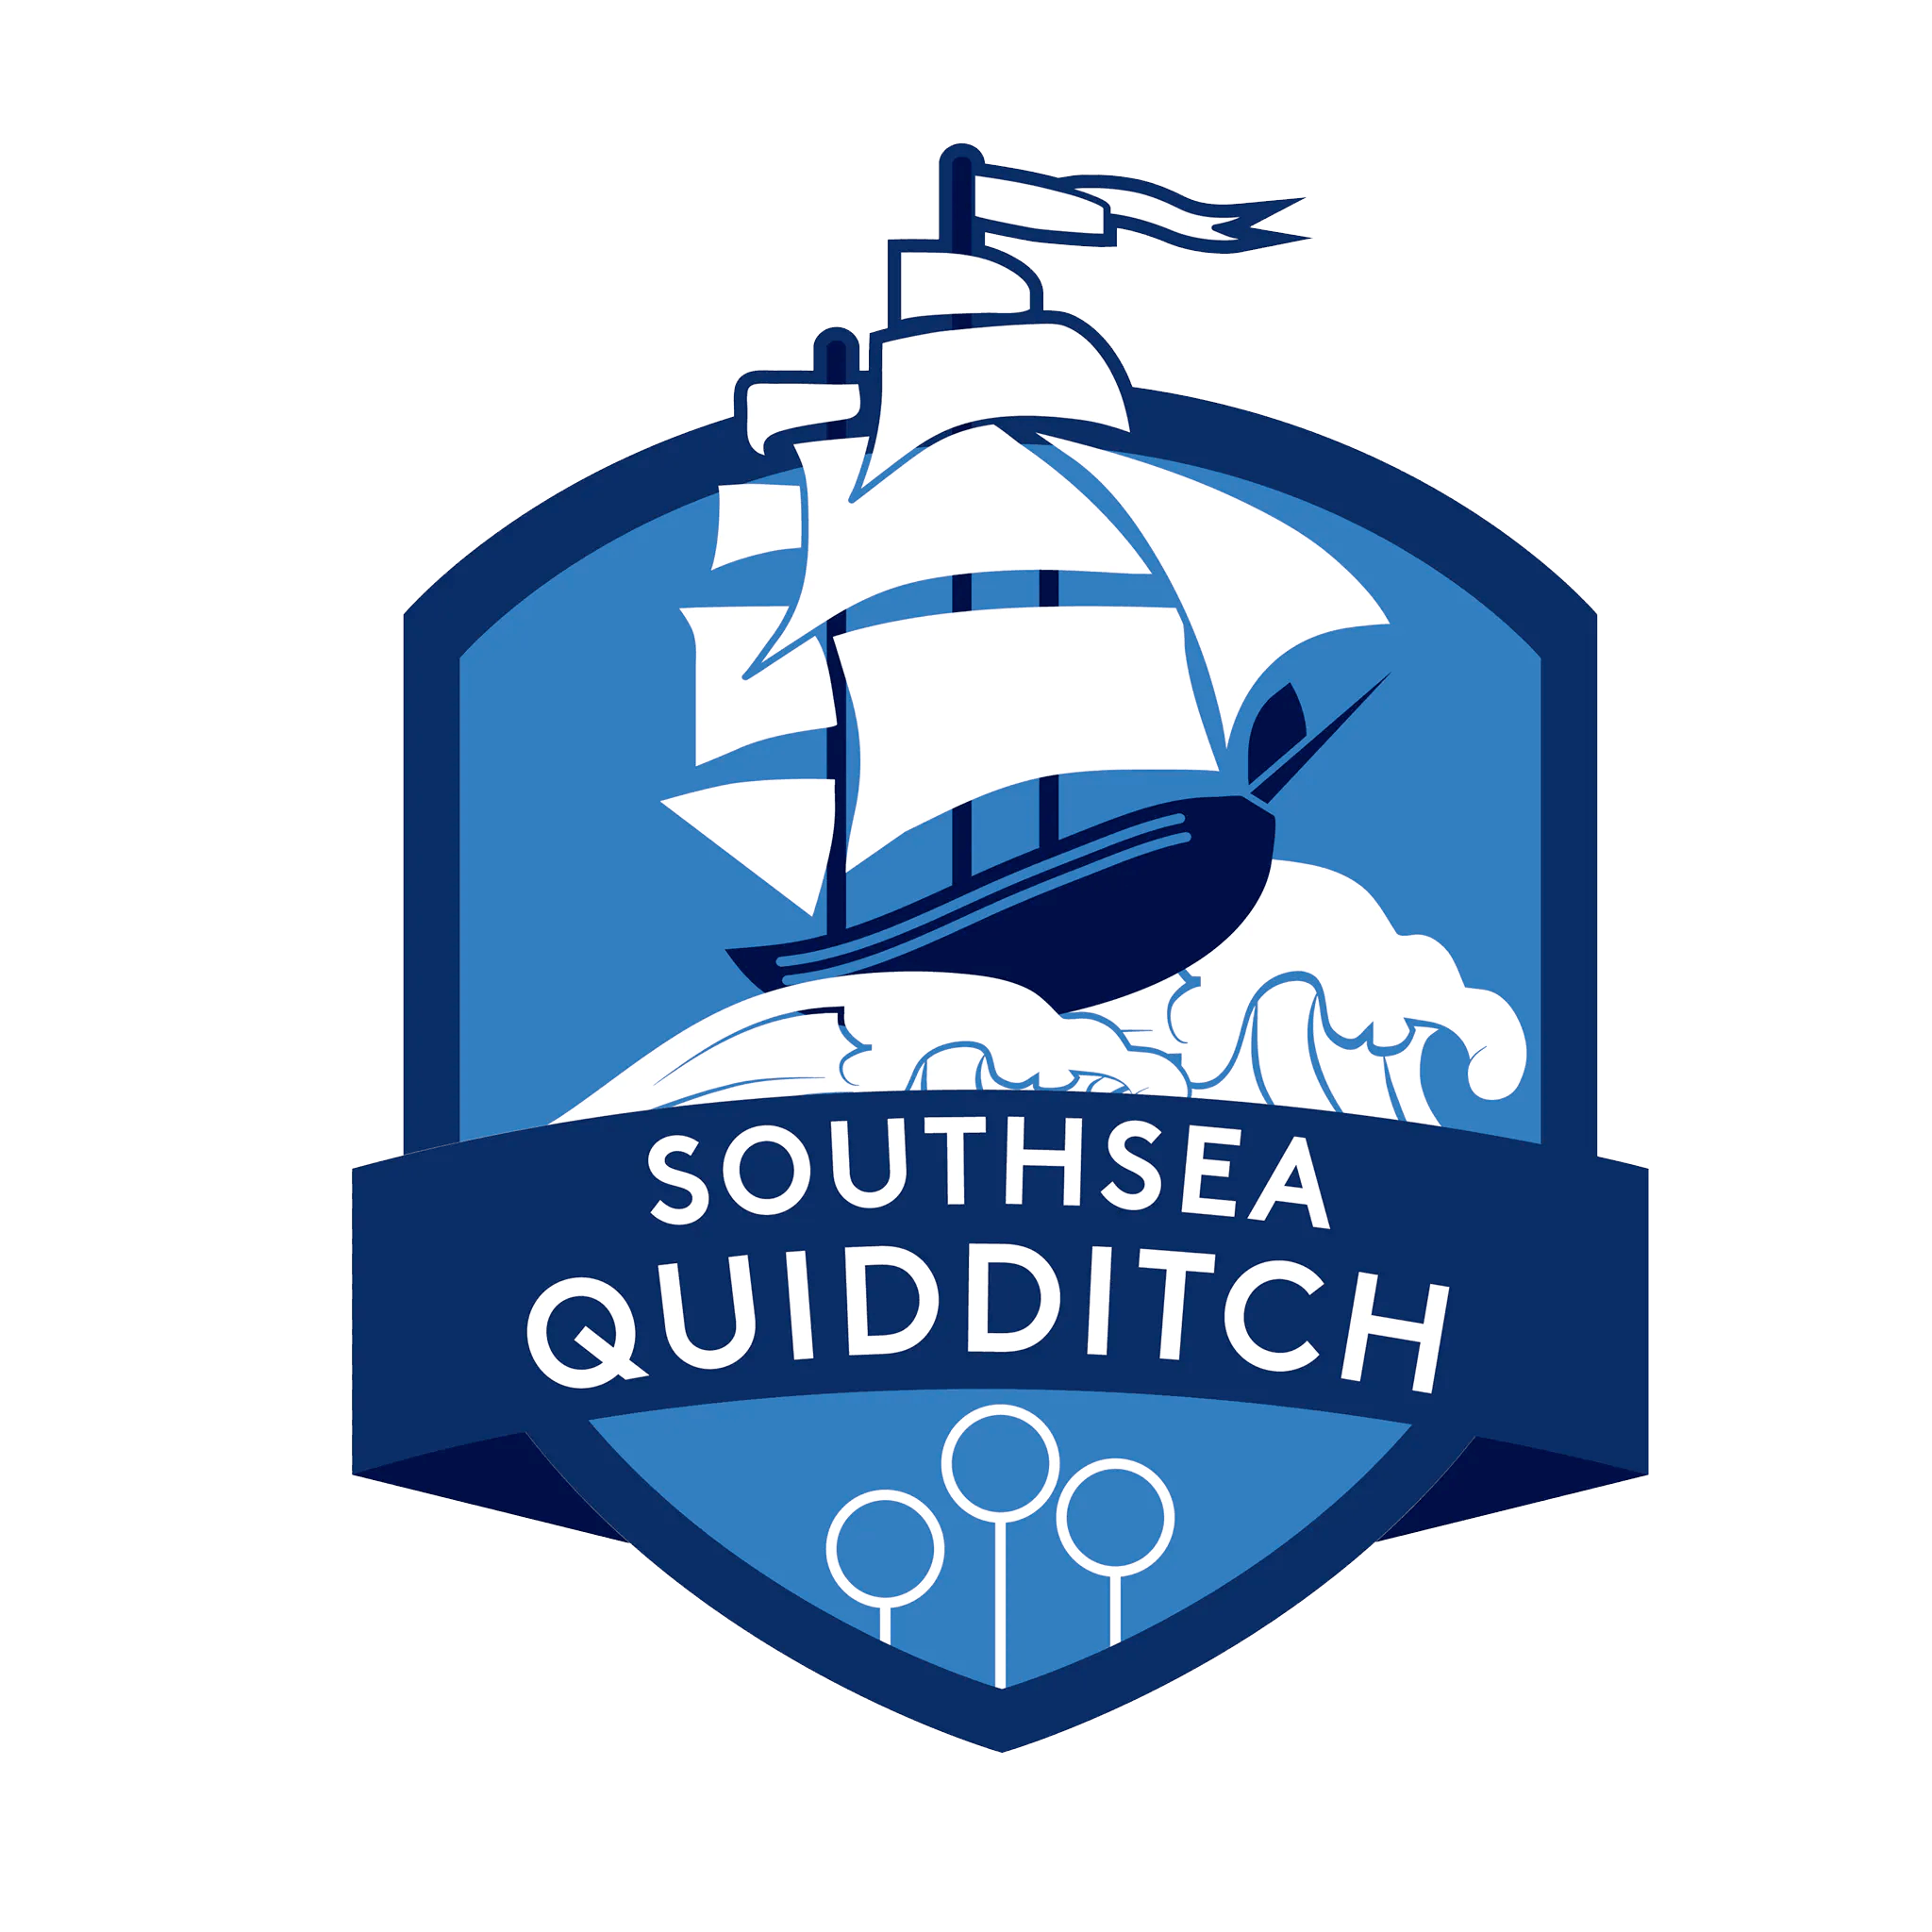 Southsea Quadball logo